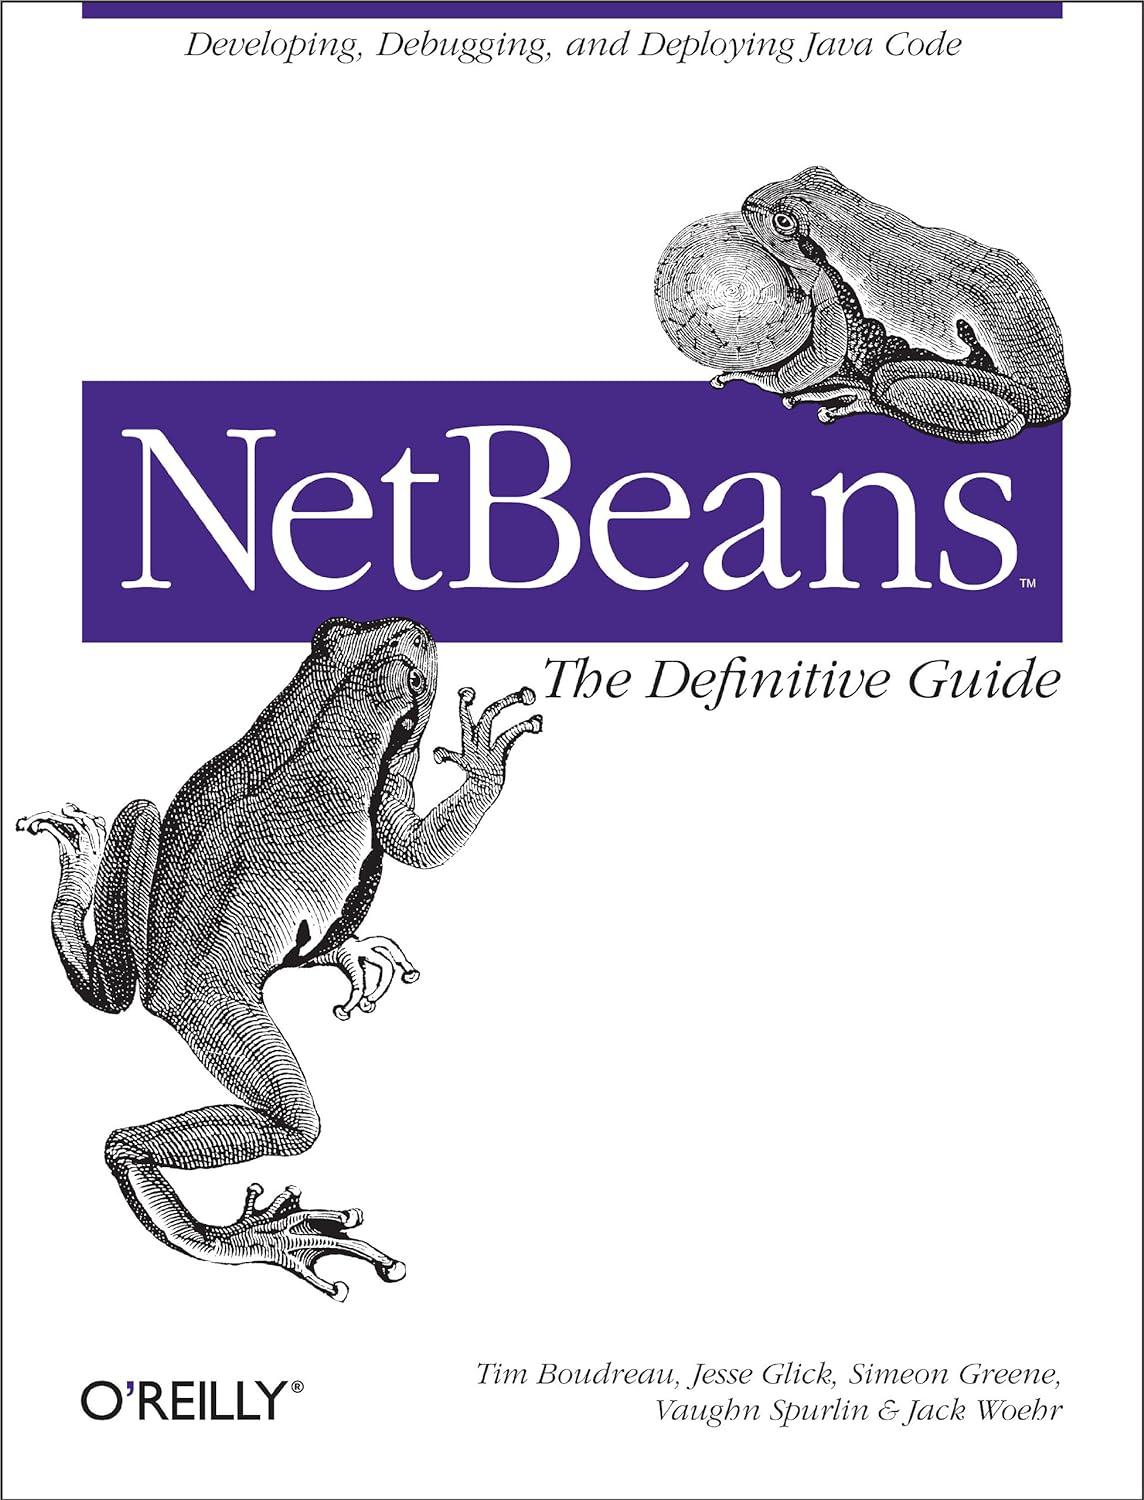 netbeans the definitive guide 1st edition tim boudreau, jesse glick, simeon greene, jack woehr, vaughn